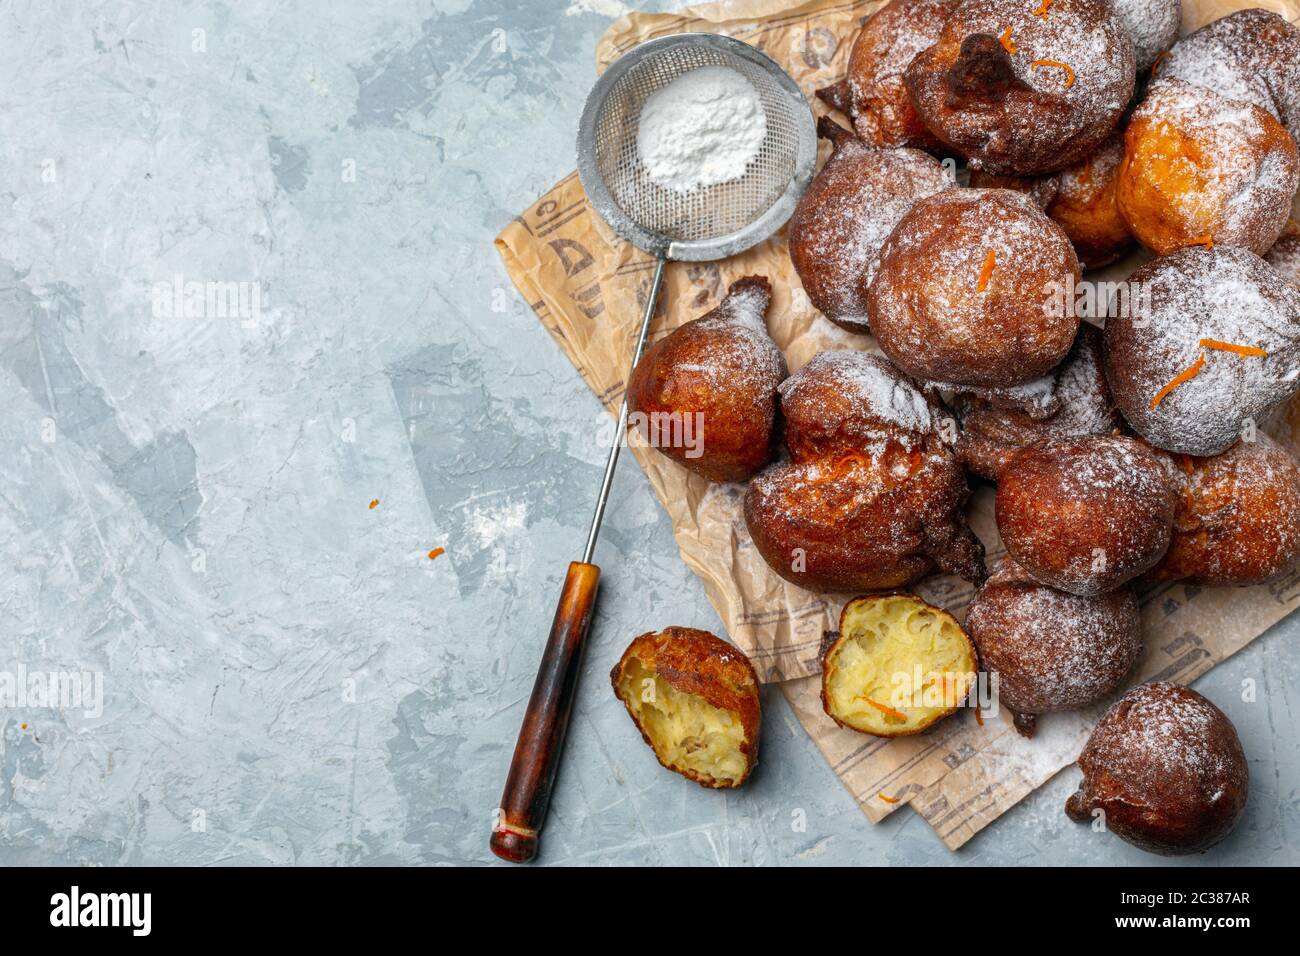 Homemade French doughnuts. Stock Photo